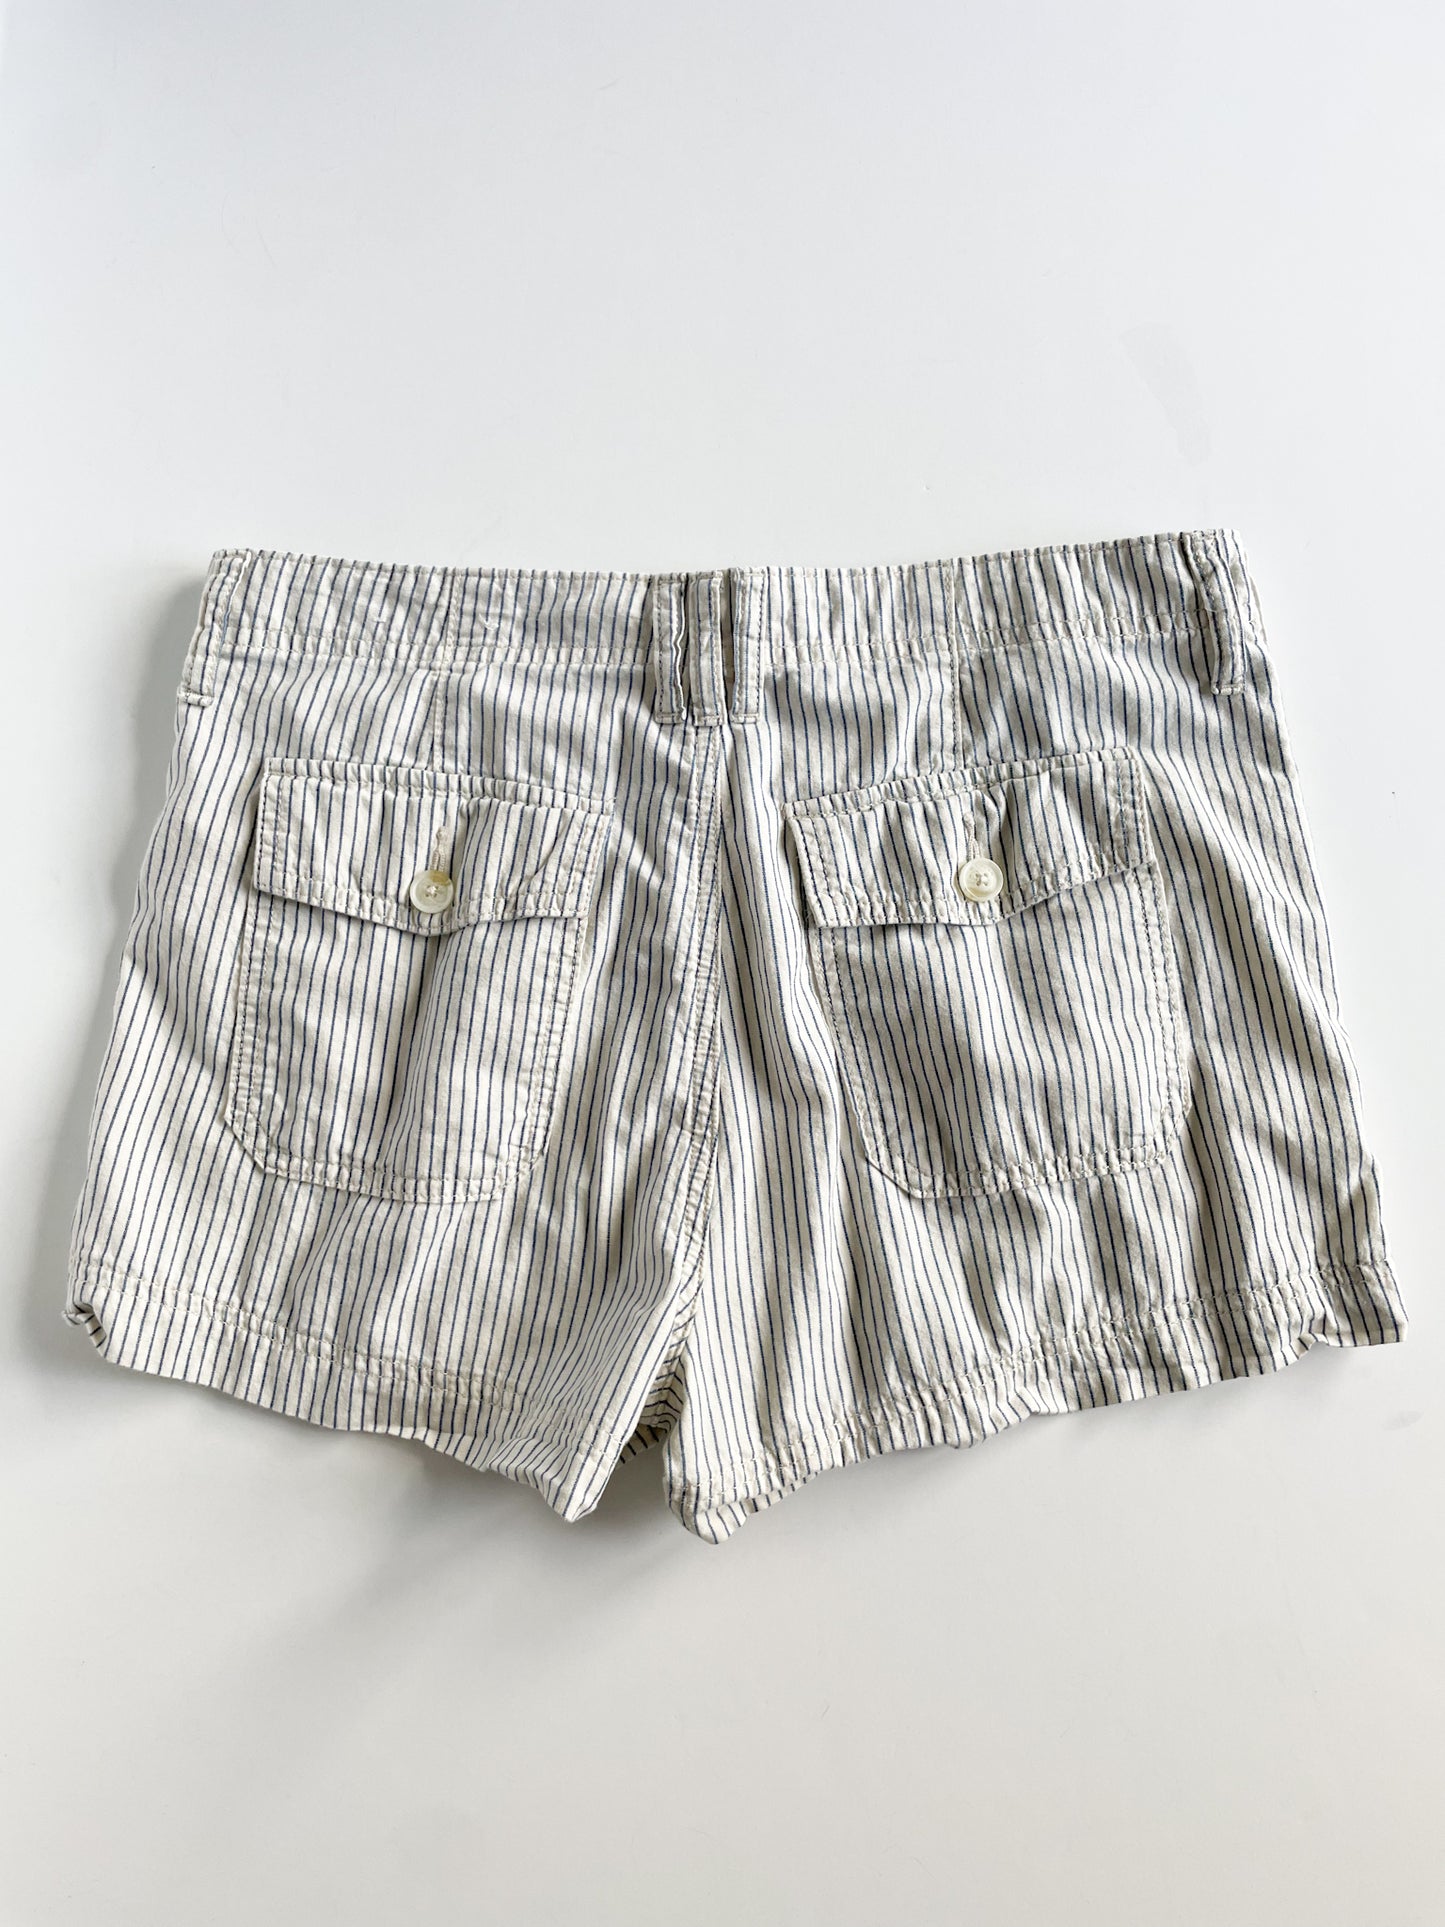 American Eagle Cream Blue Pinstripe 100% Cotton High Rise Shorts - Size 8